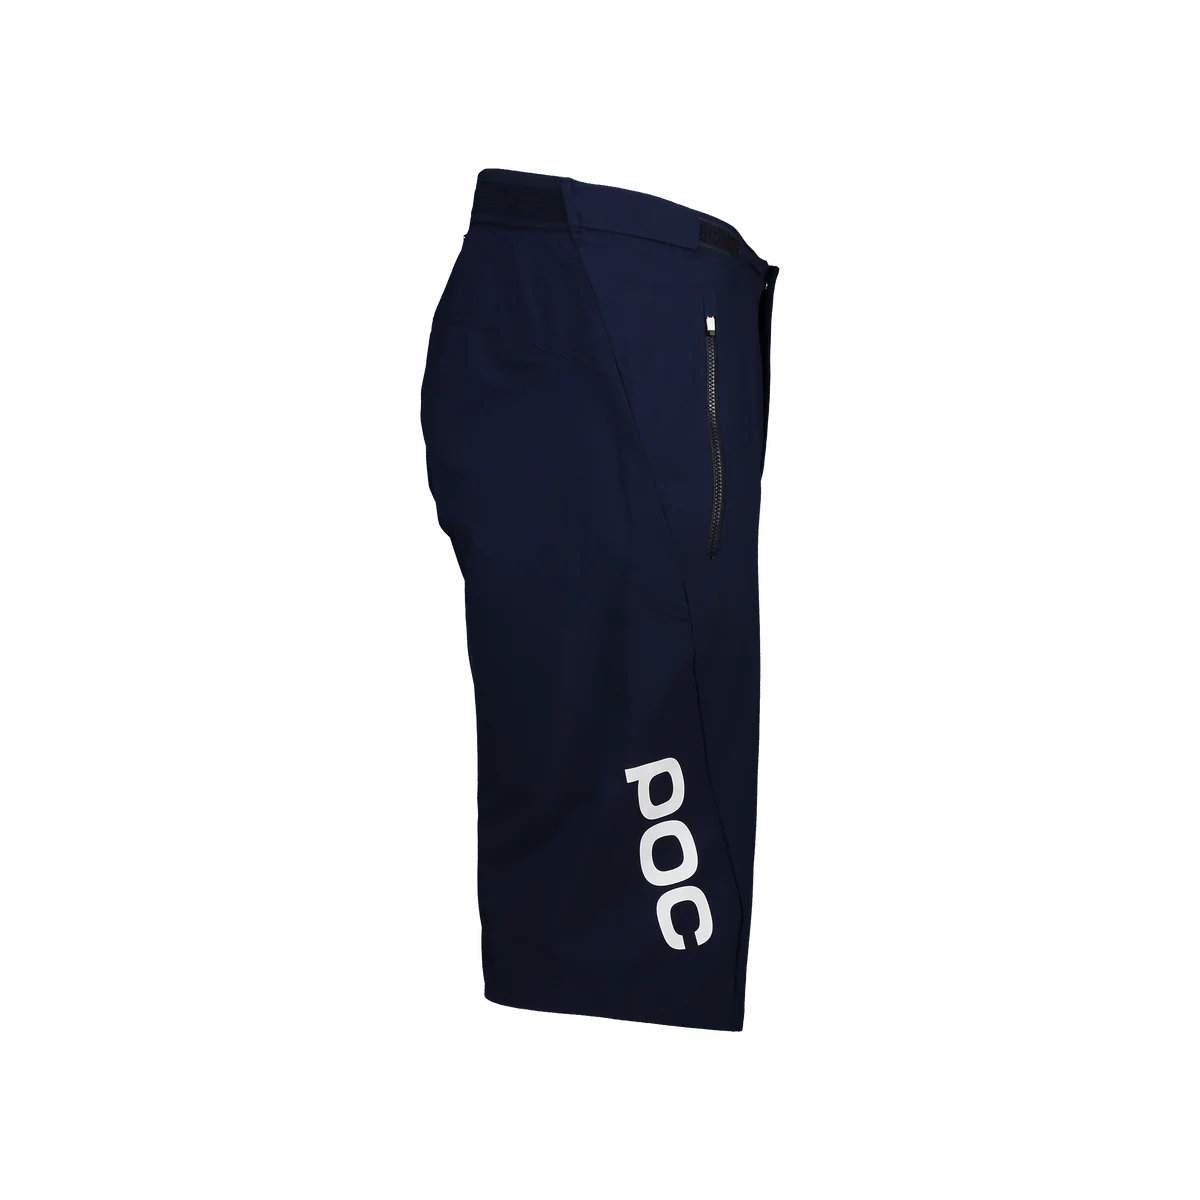 POC Men's Essential Enduro Light Shorts